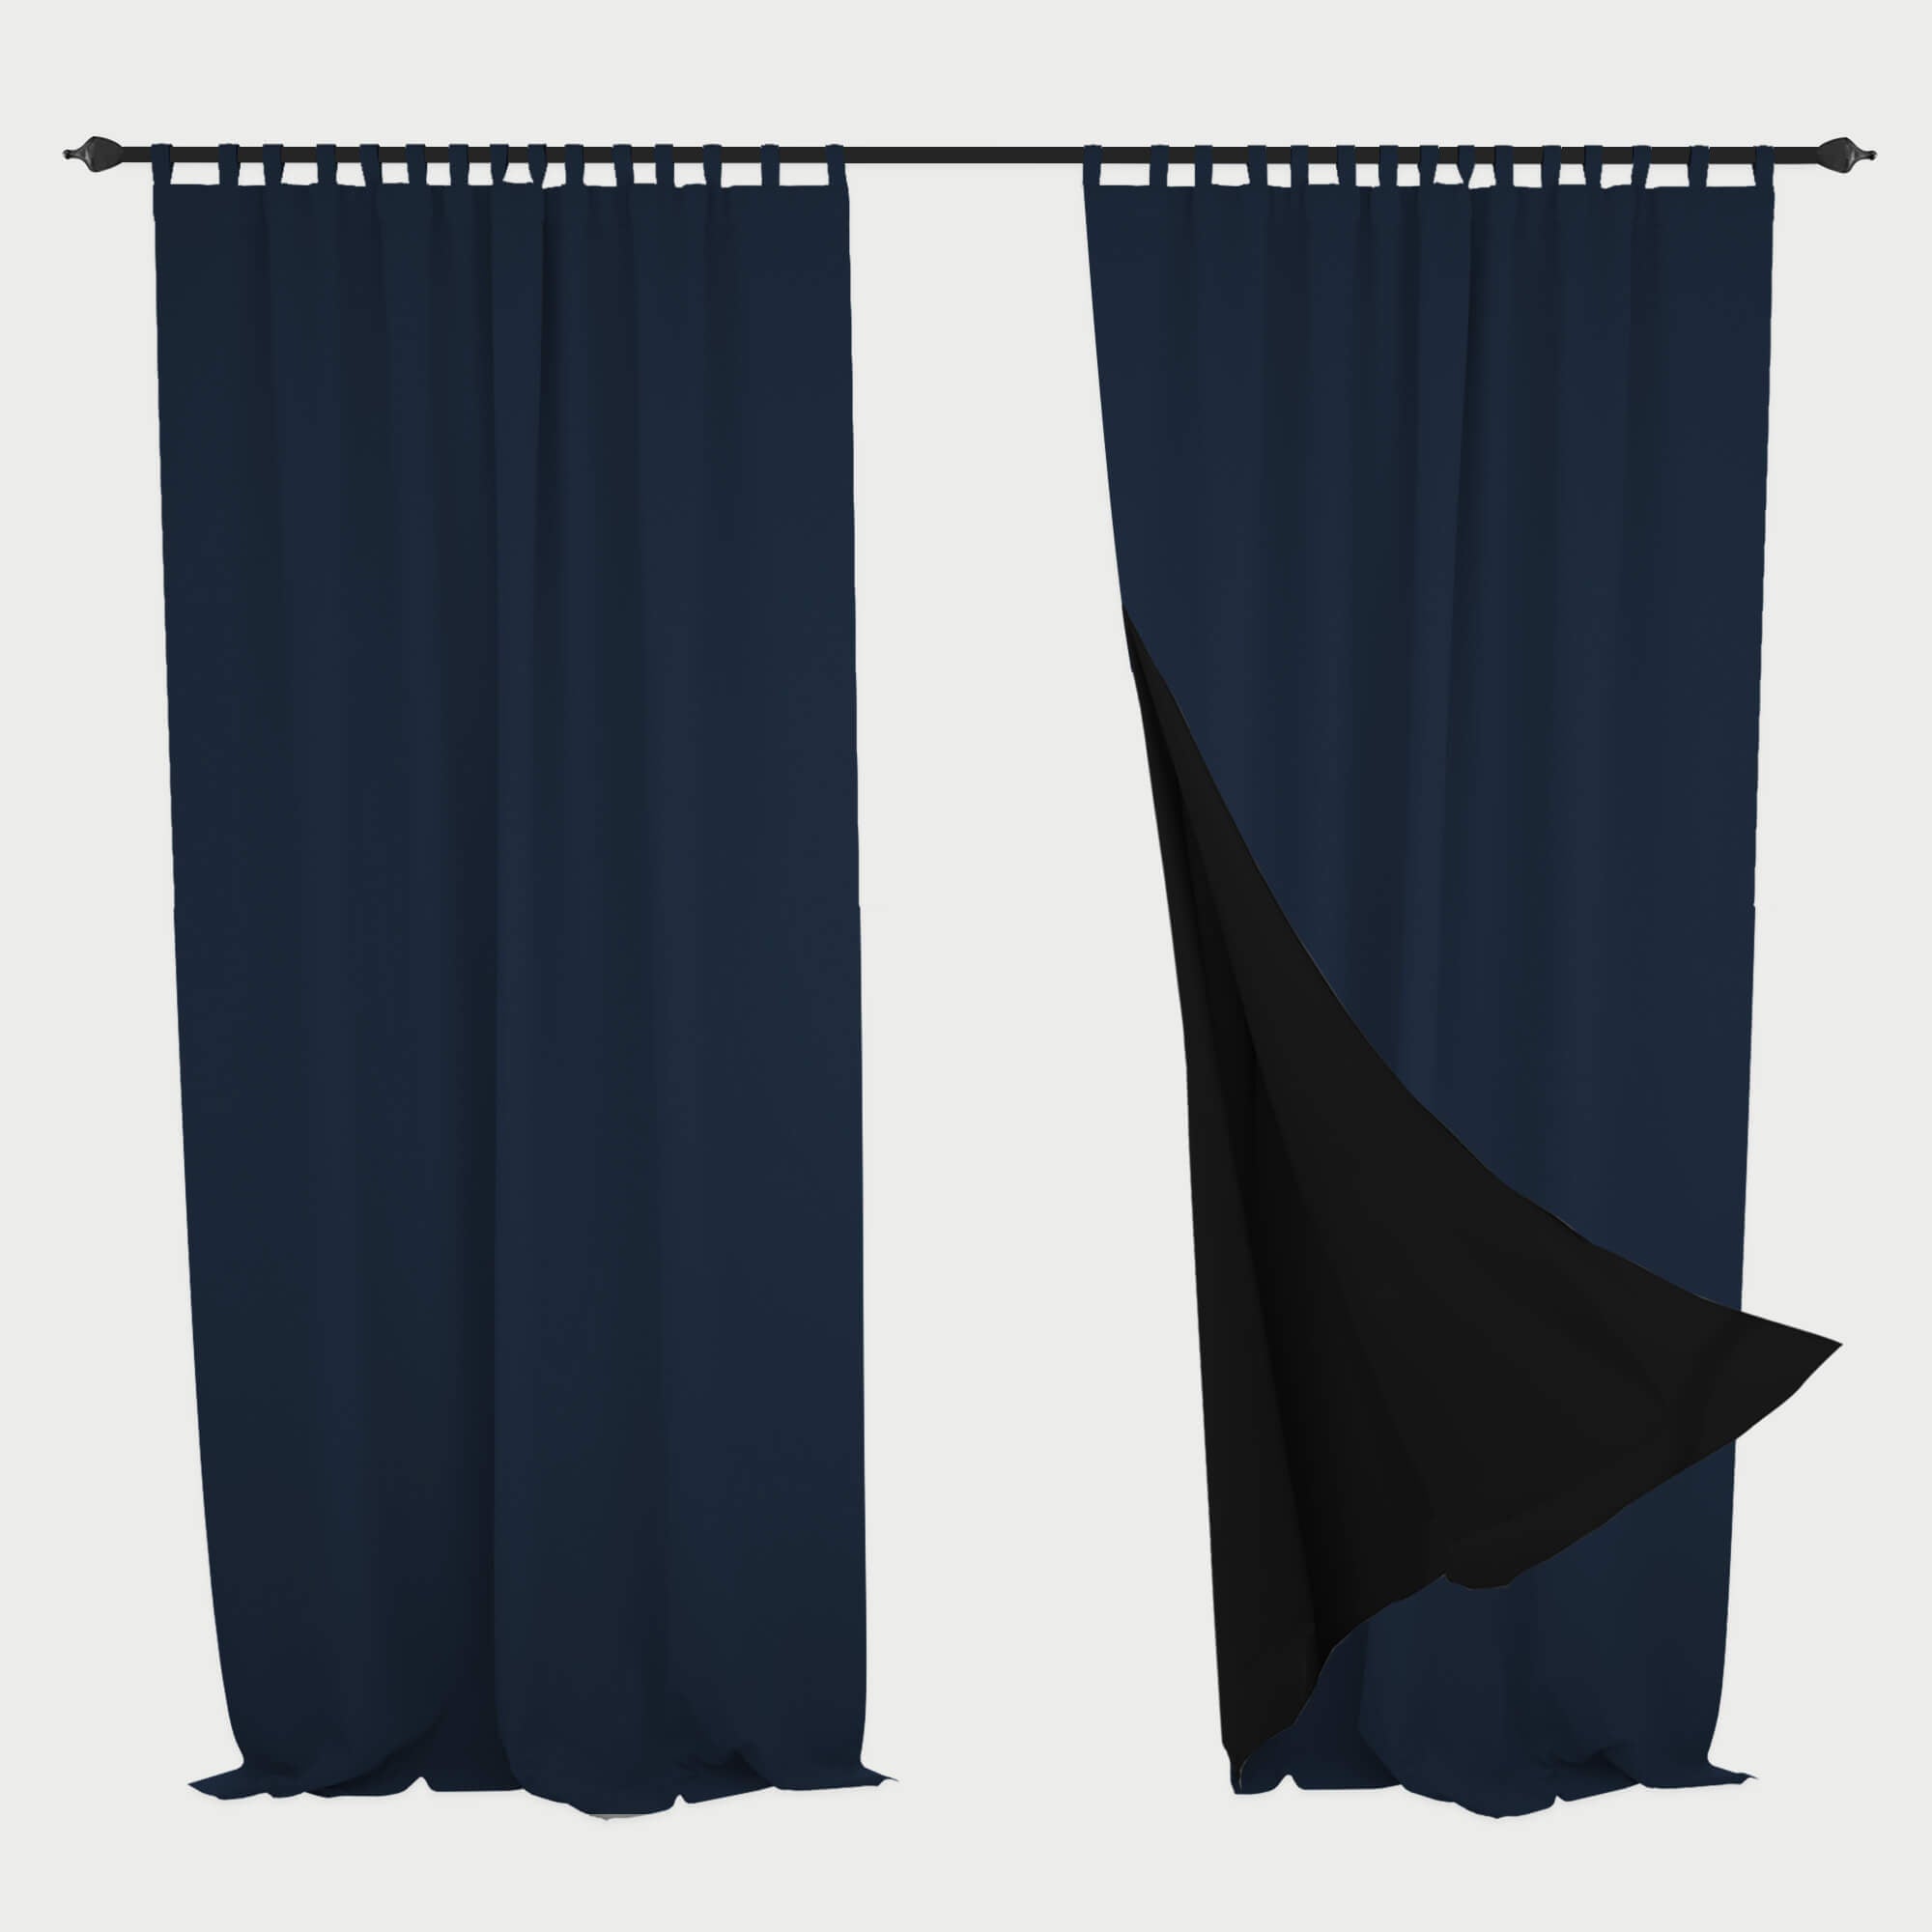 SNOWCITY Blackout Curtains Navy Blue - Tab Top